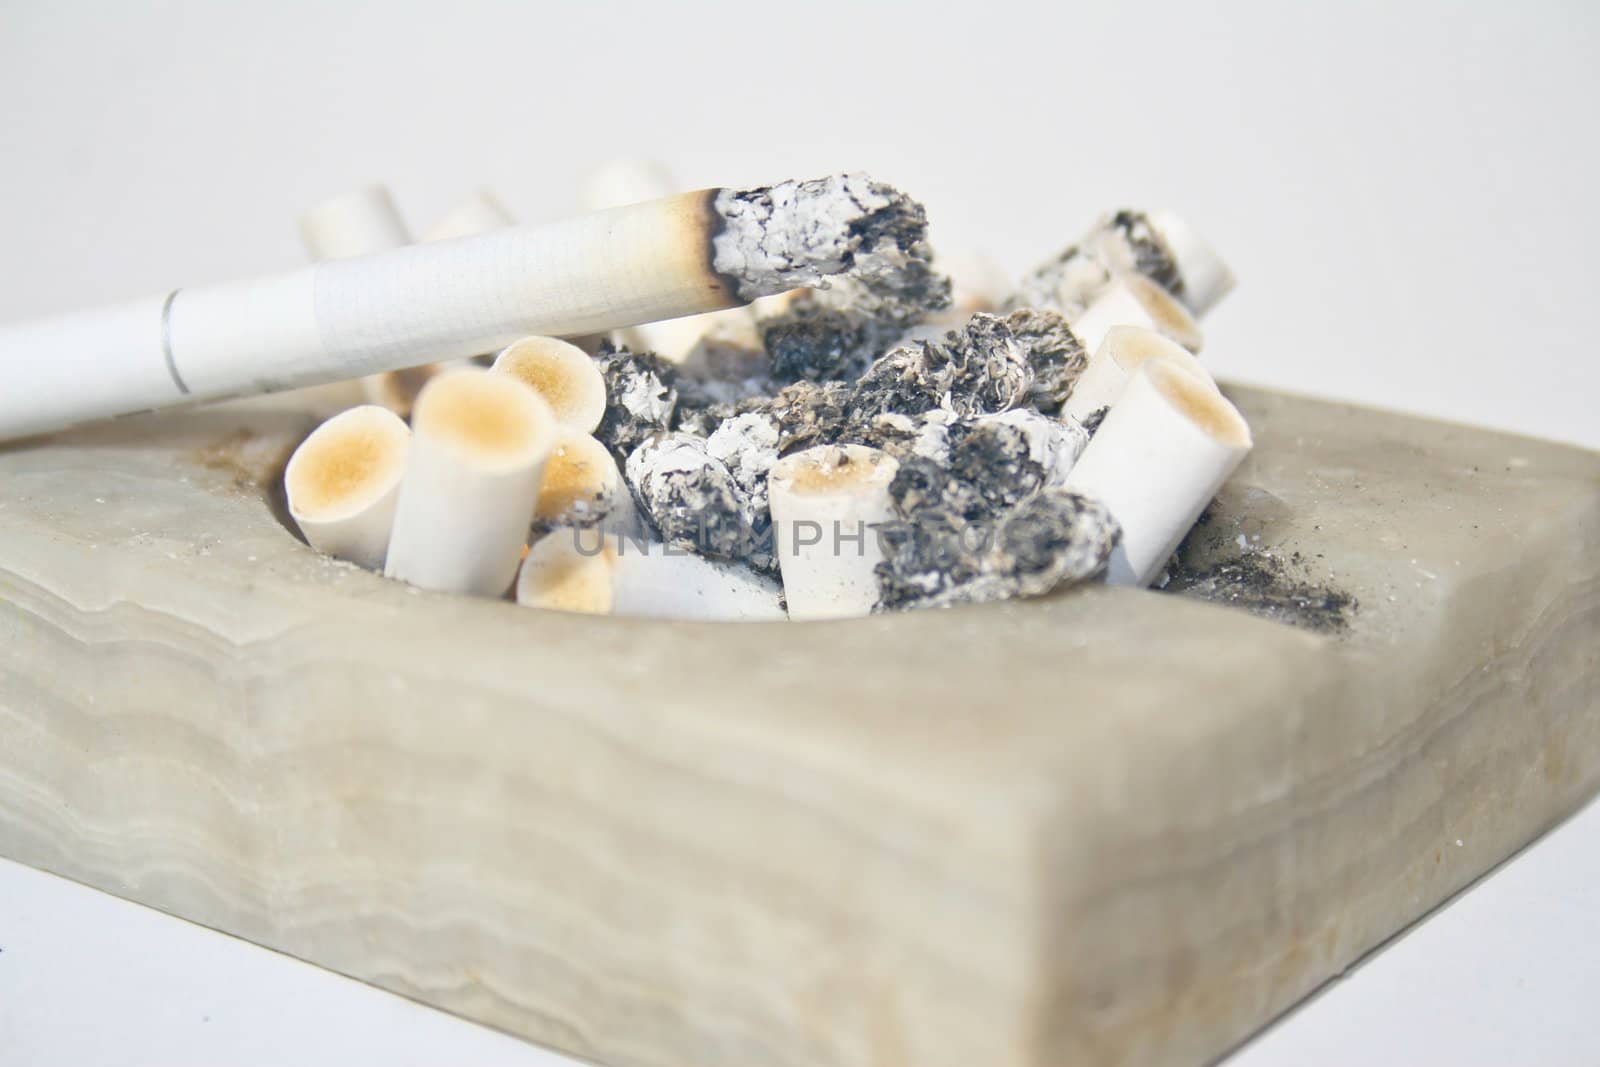 Full ashtray by timscottrom